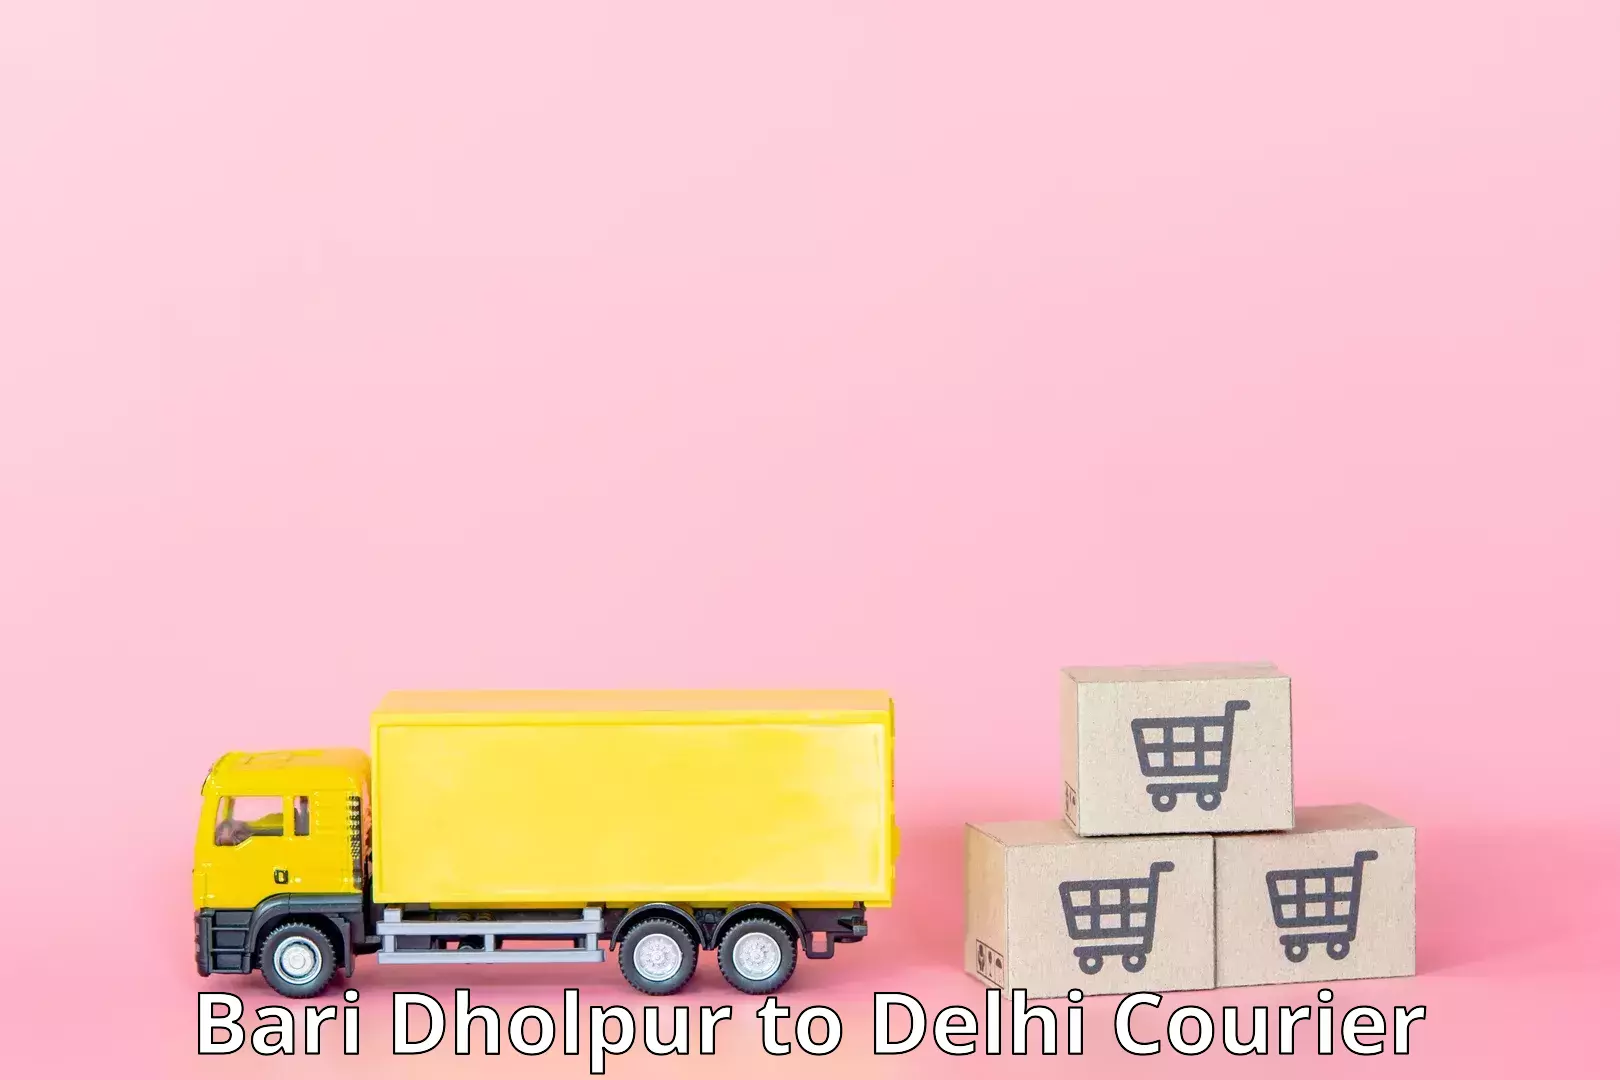 Global shipping networks Bari Dholpur to East Delhi